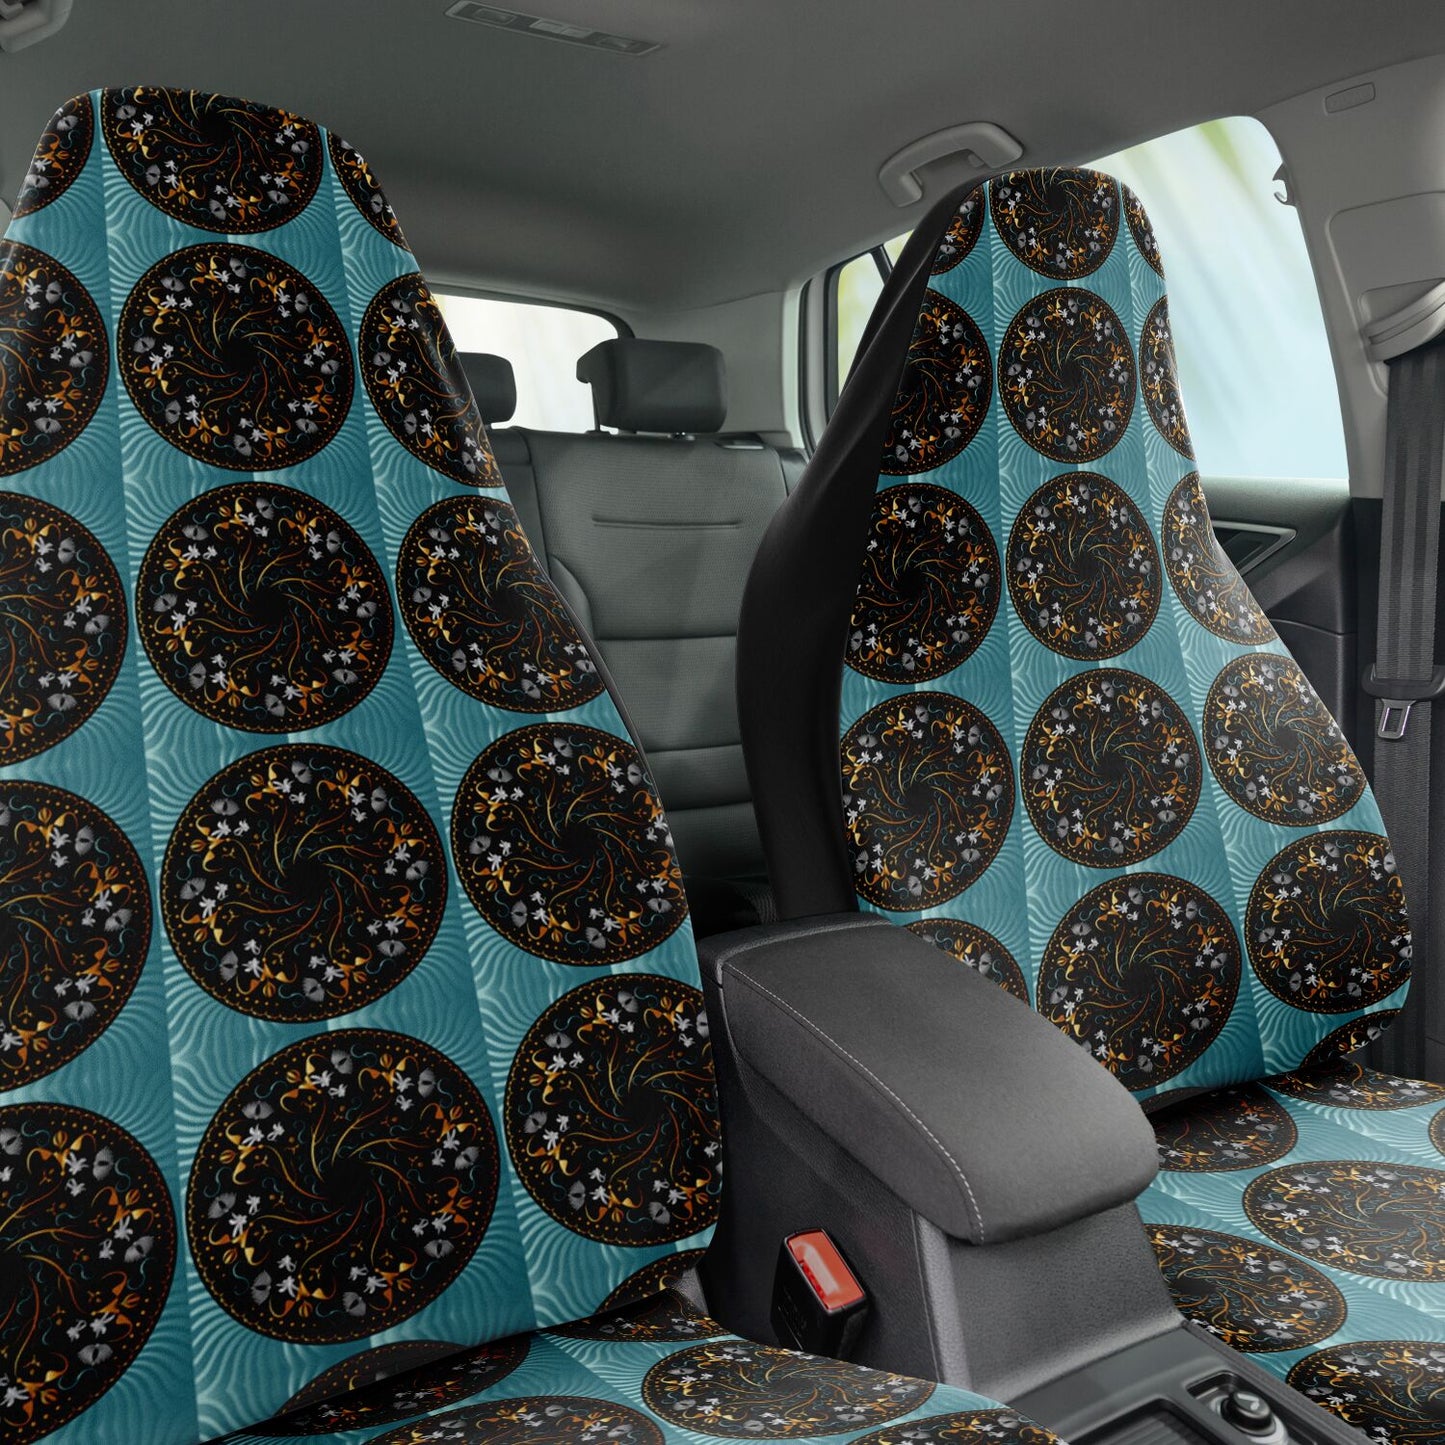 Car Seat Cover - AOP  Kukloso No 155 Mandala design, Aqua-Black on Black - Free Shipping